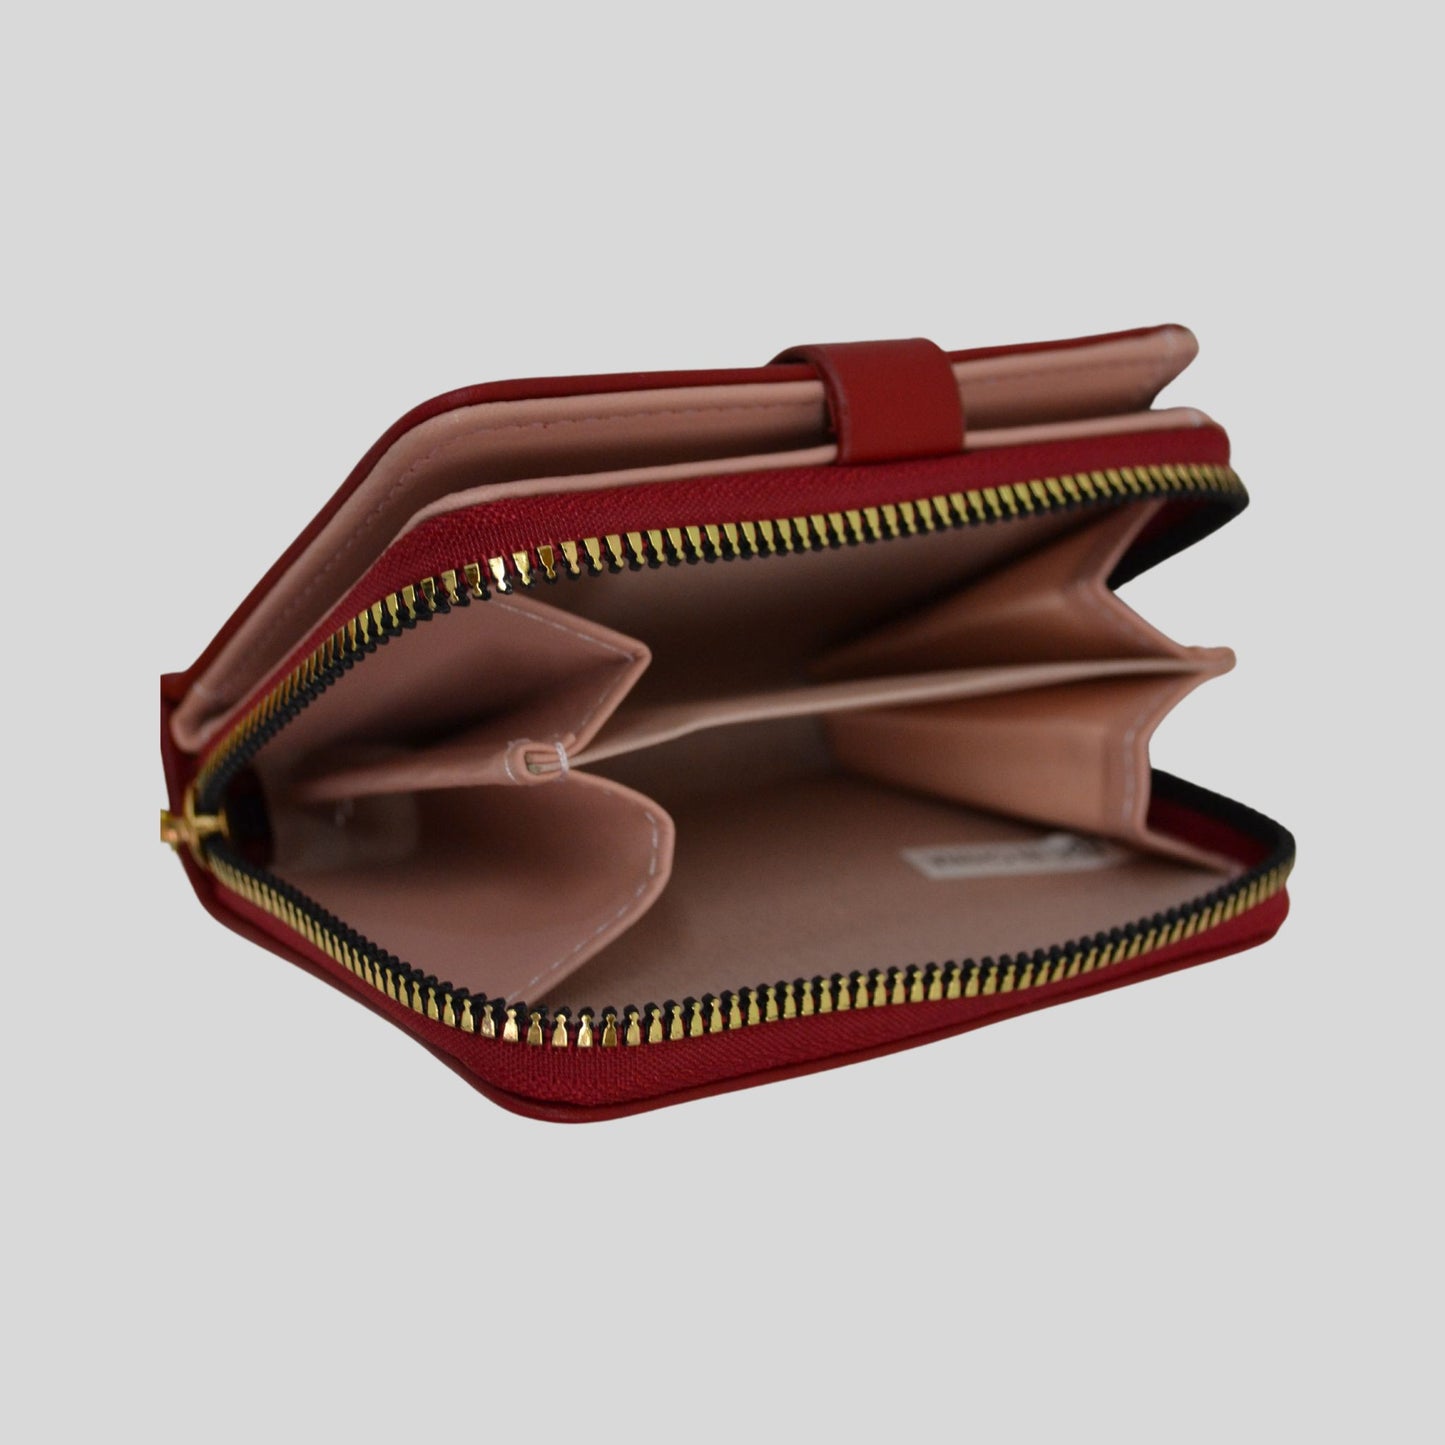 S3075 Mini Wallet